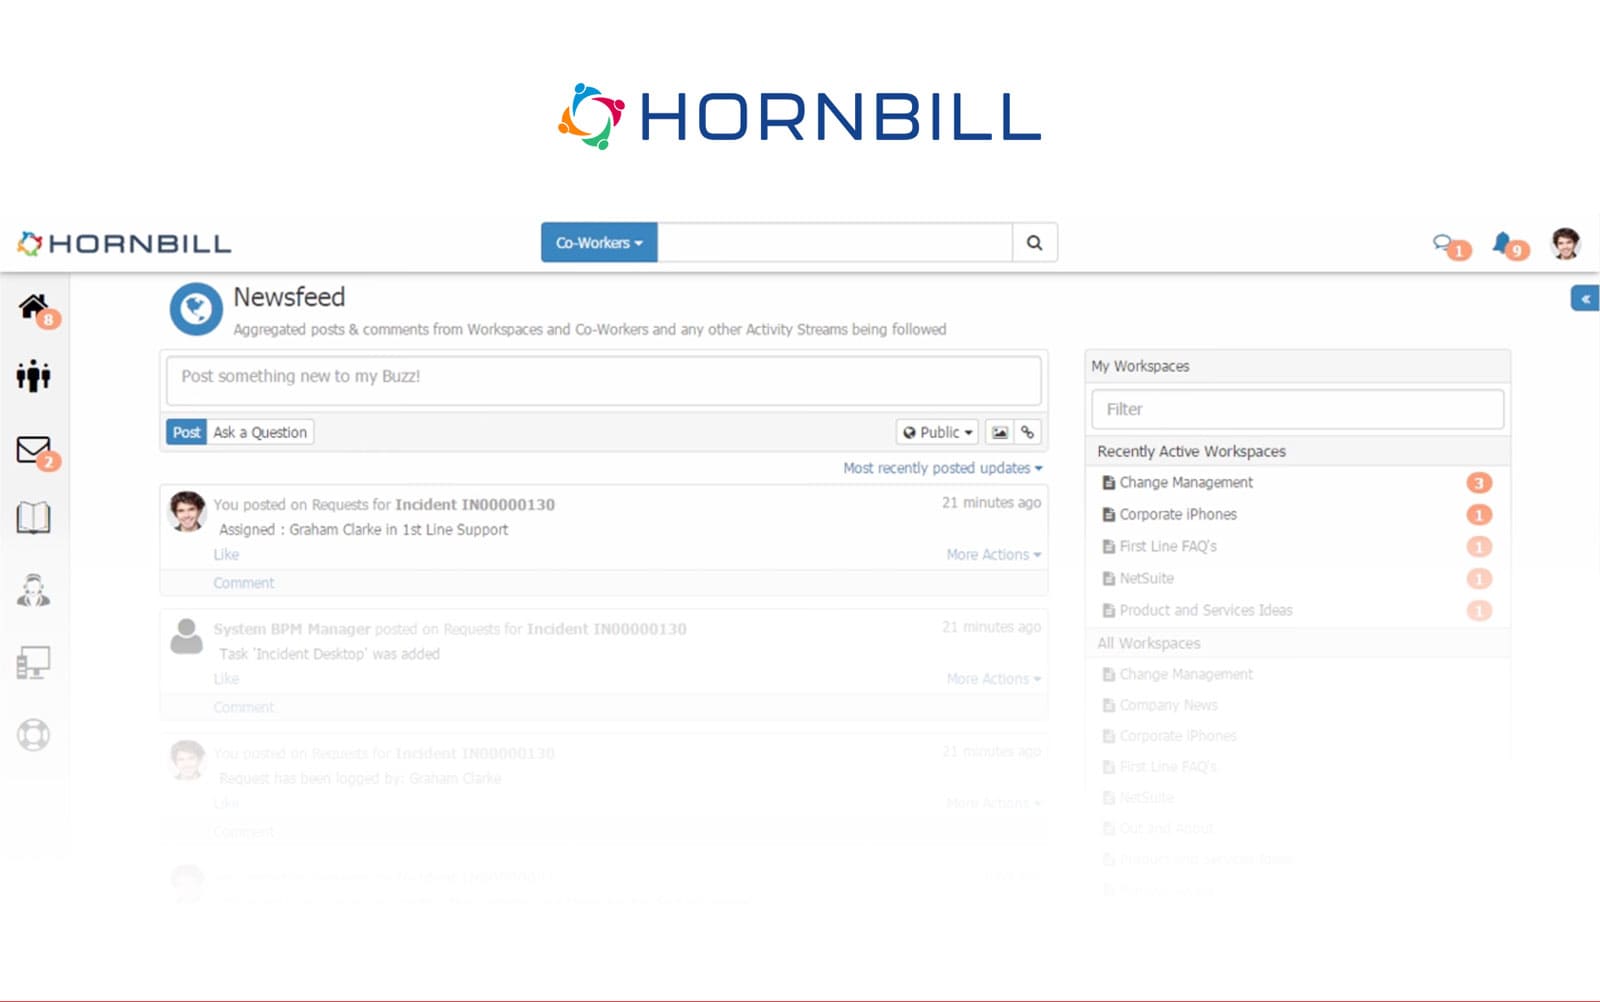 Example of Hornbill's interface.